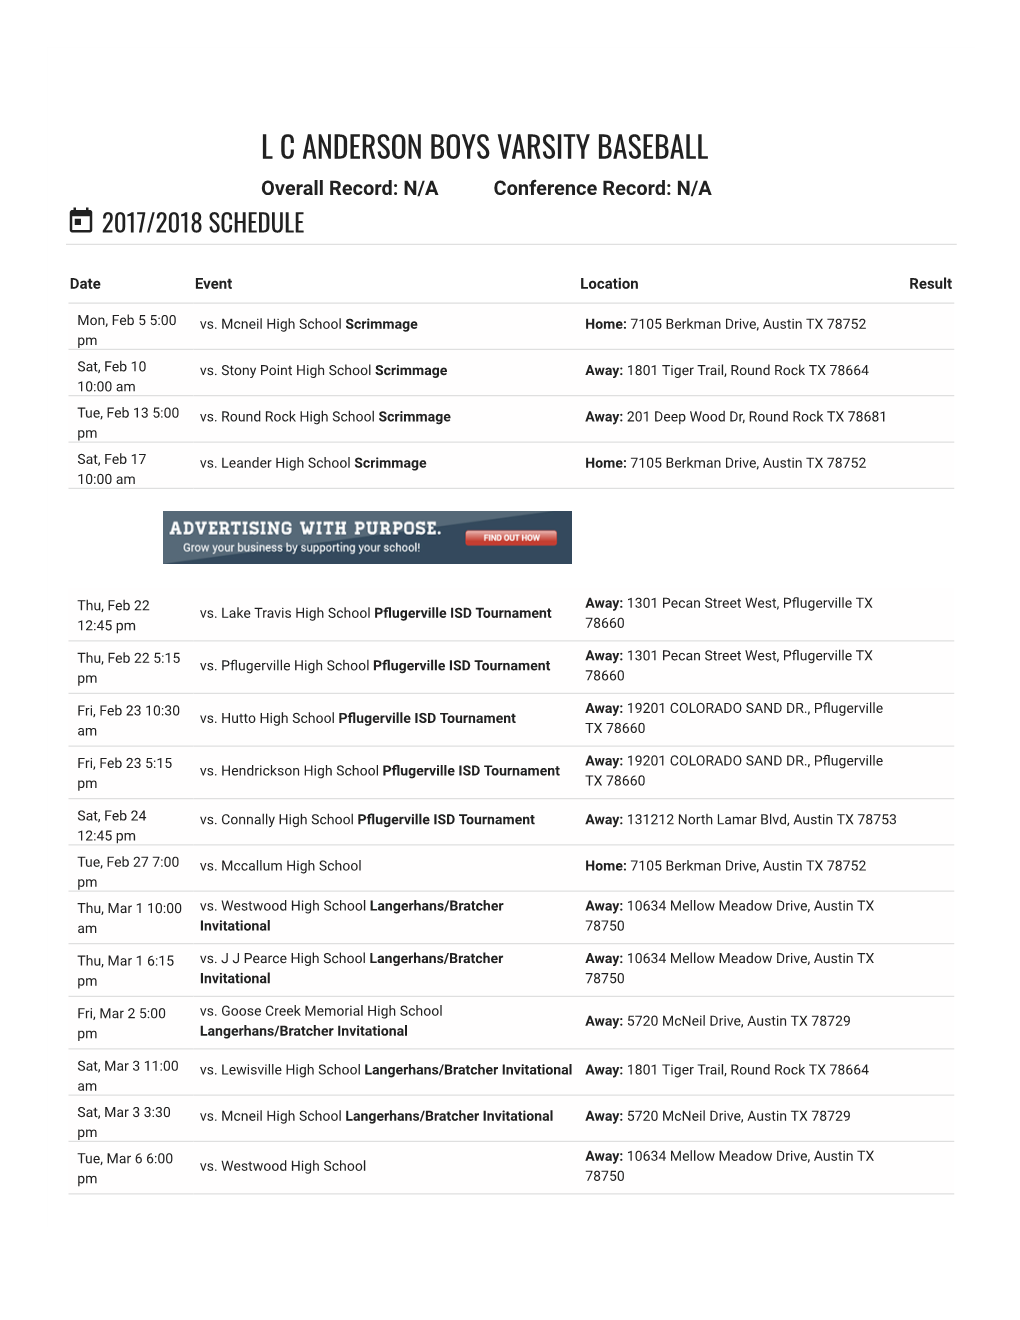 Boys Varsity Baseball Schedule – L C Anderson Trojanss